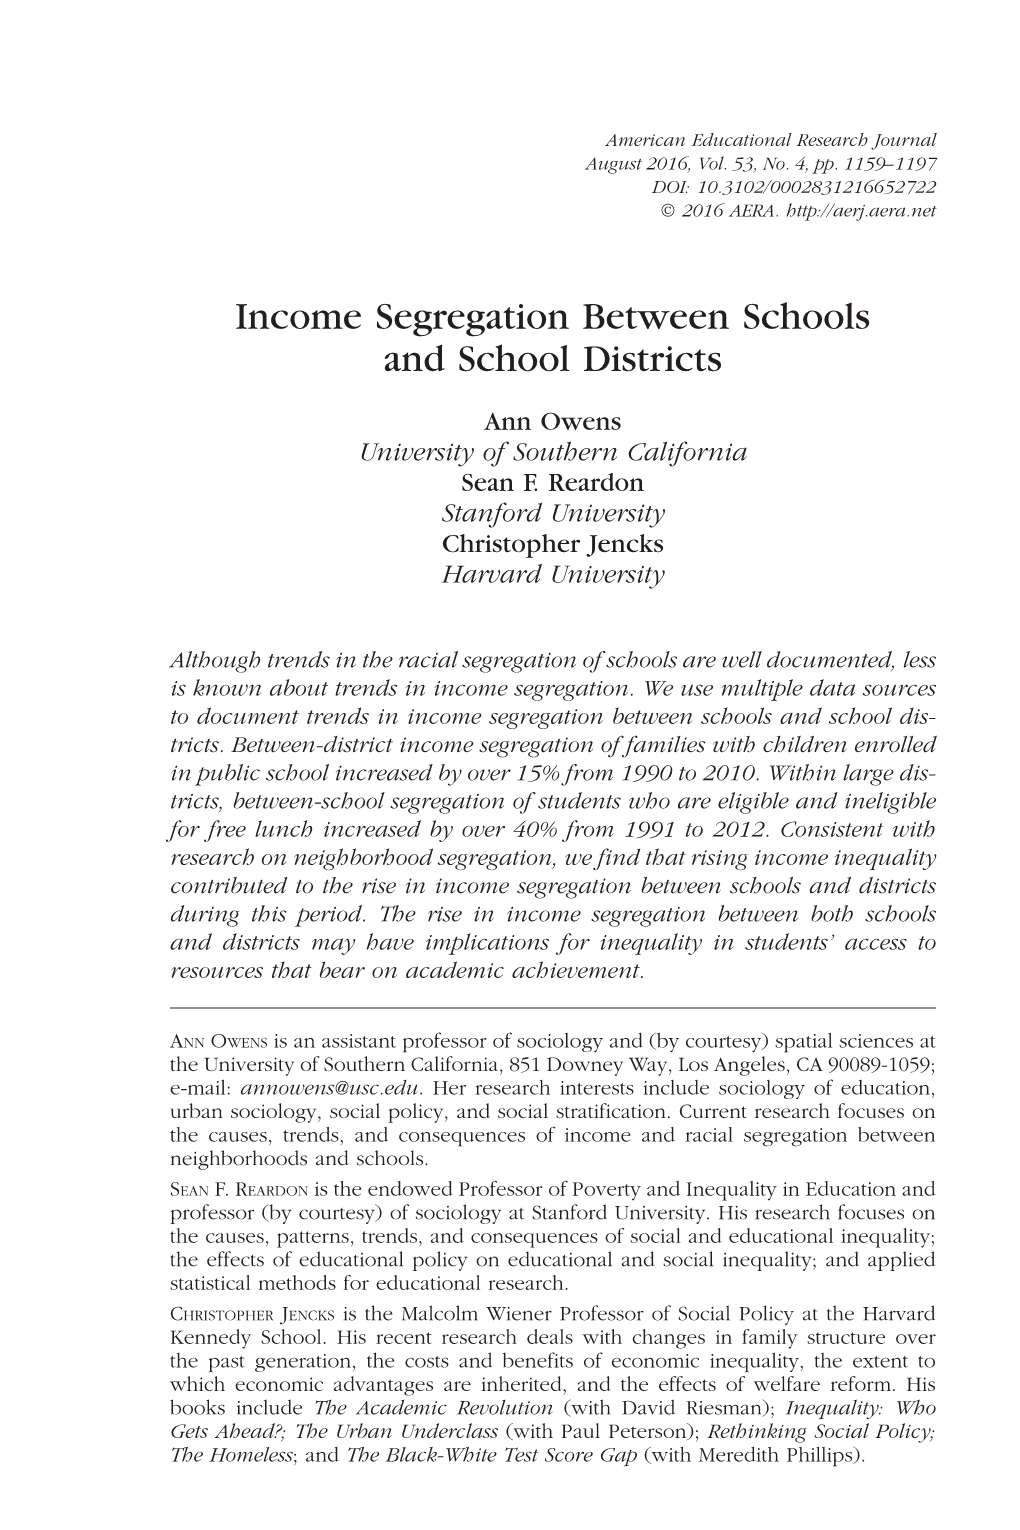 Income Segregation Between Schools and Districts Ann Owens Et Al.Pdf